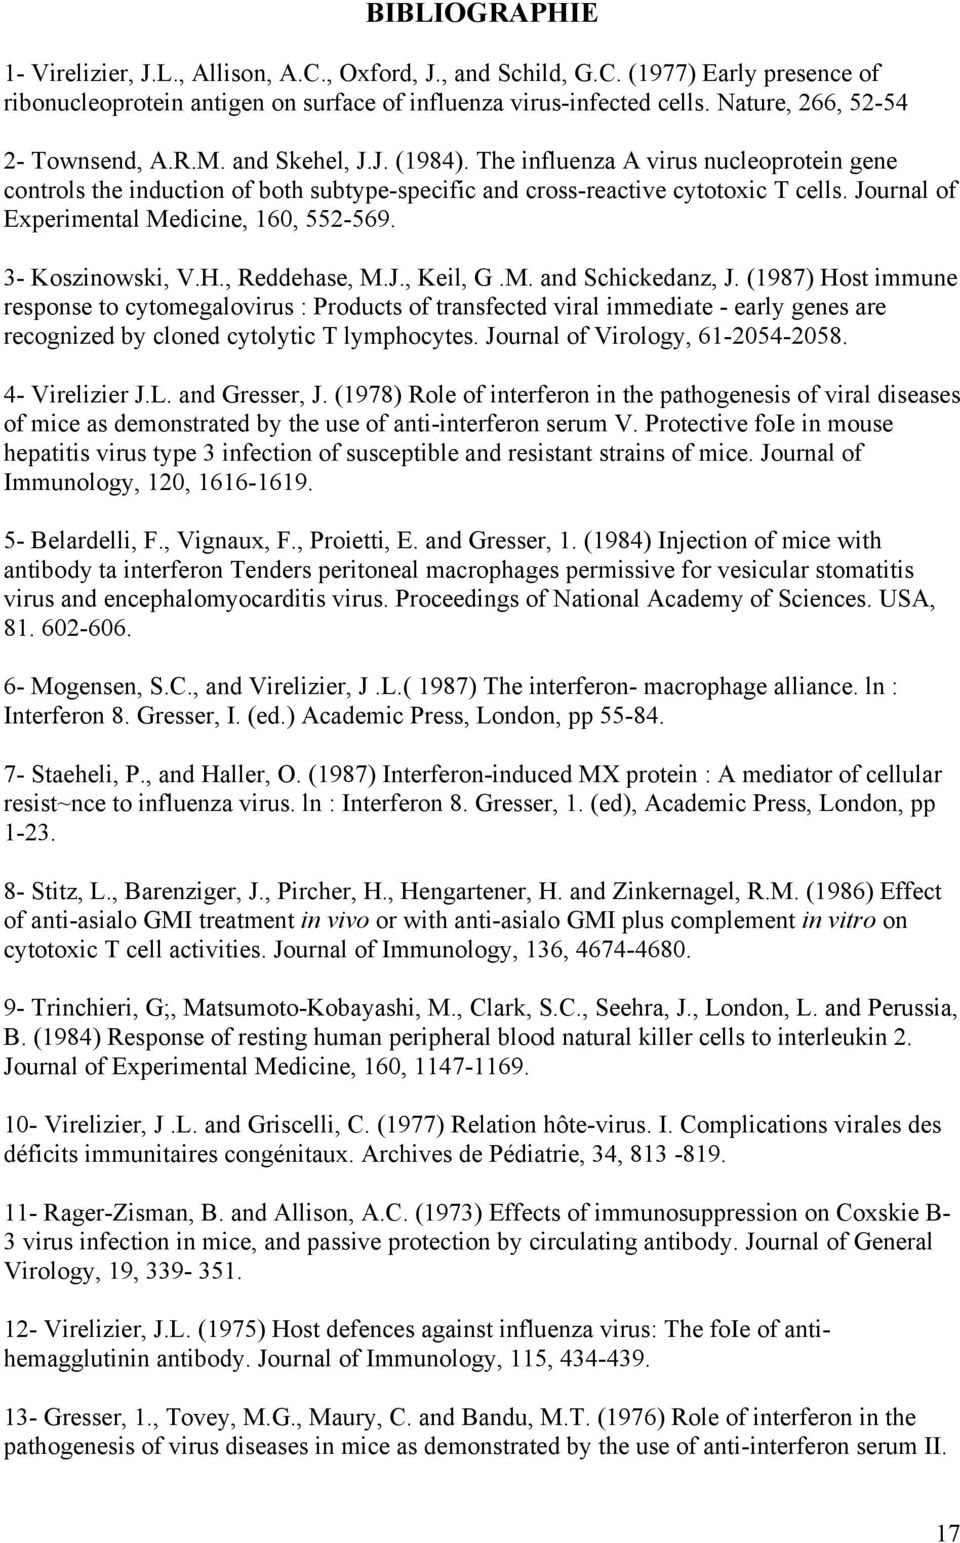 Journal of Experimental Medicine, 160, 552-569. 3- Koszinowski, V.H., Reddehase, M.J., Keil, G.M. and Schickedanz, J.